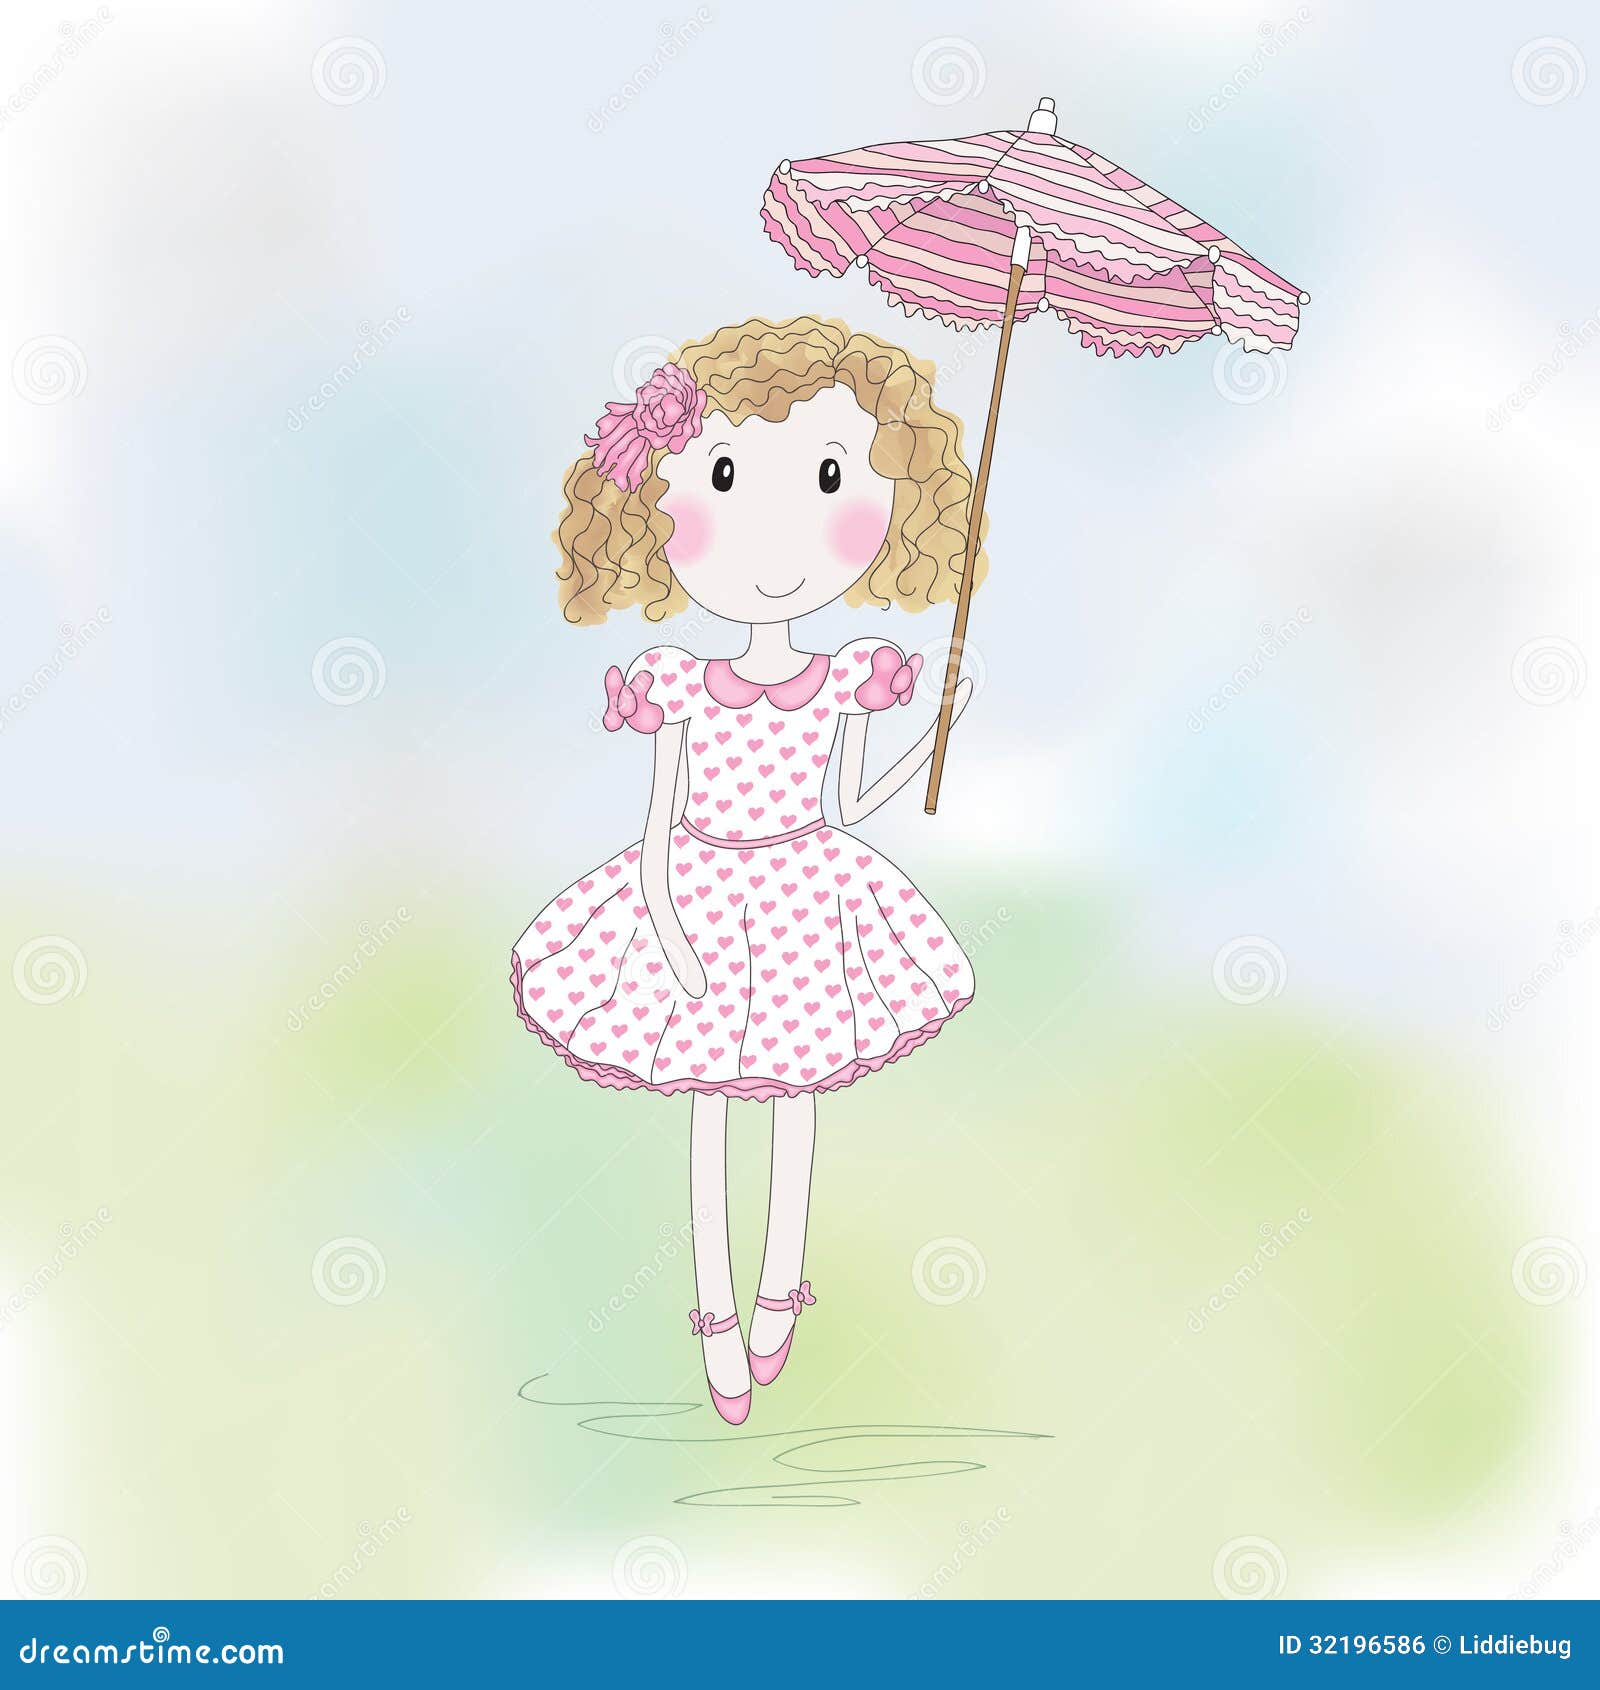 252225 Girl Dress Cartoon Images Stock Photos  Vectors  Shutterstock